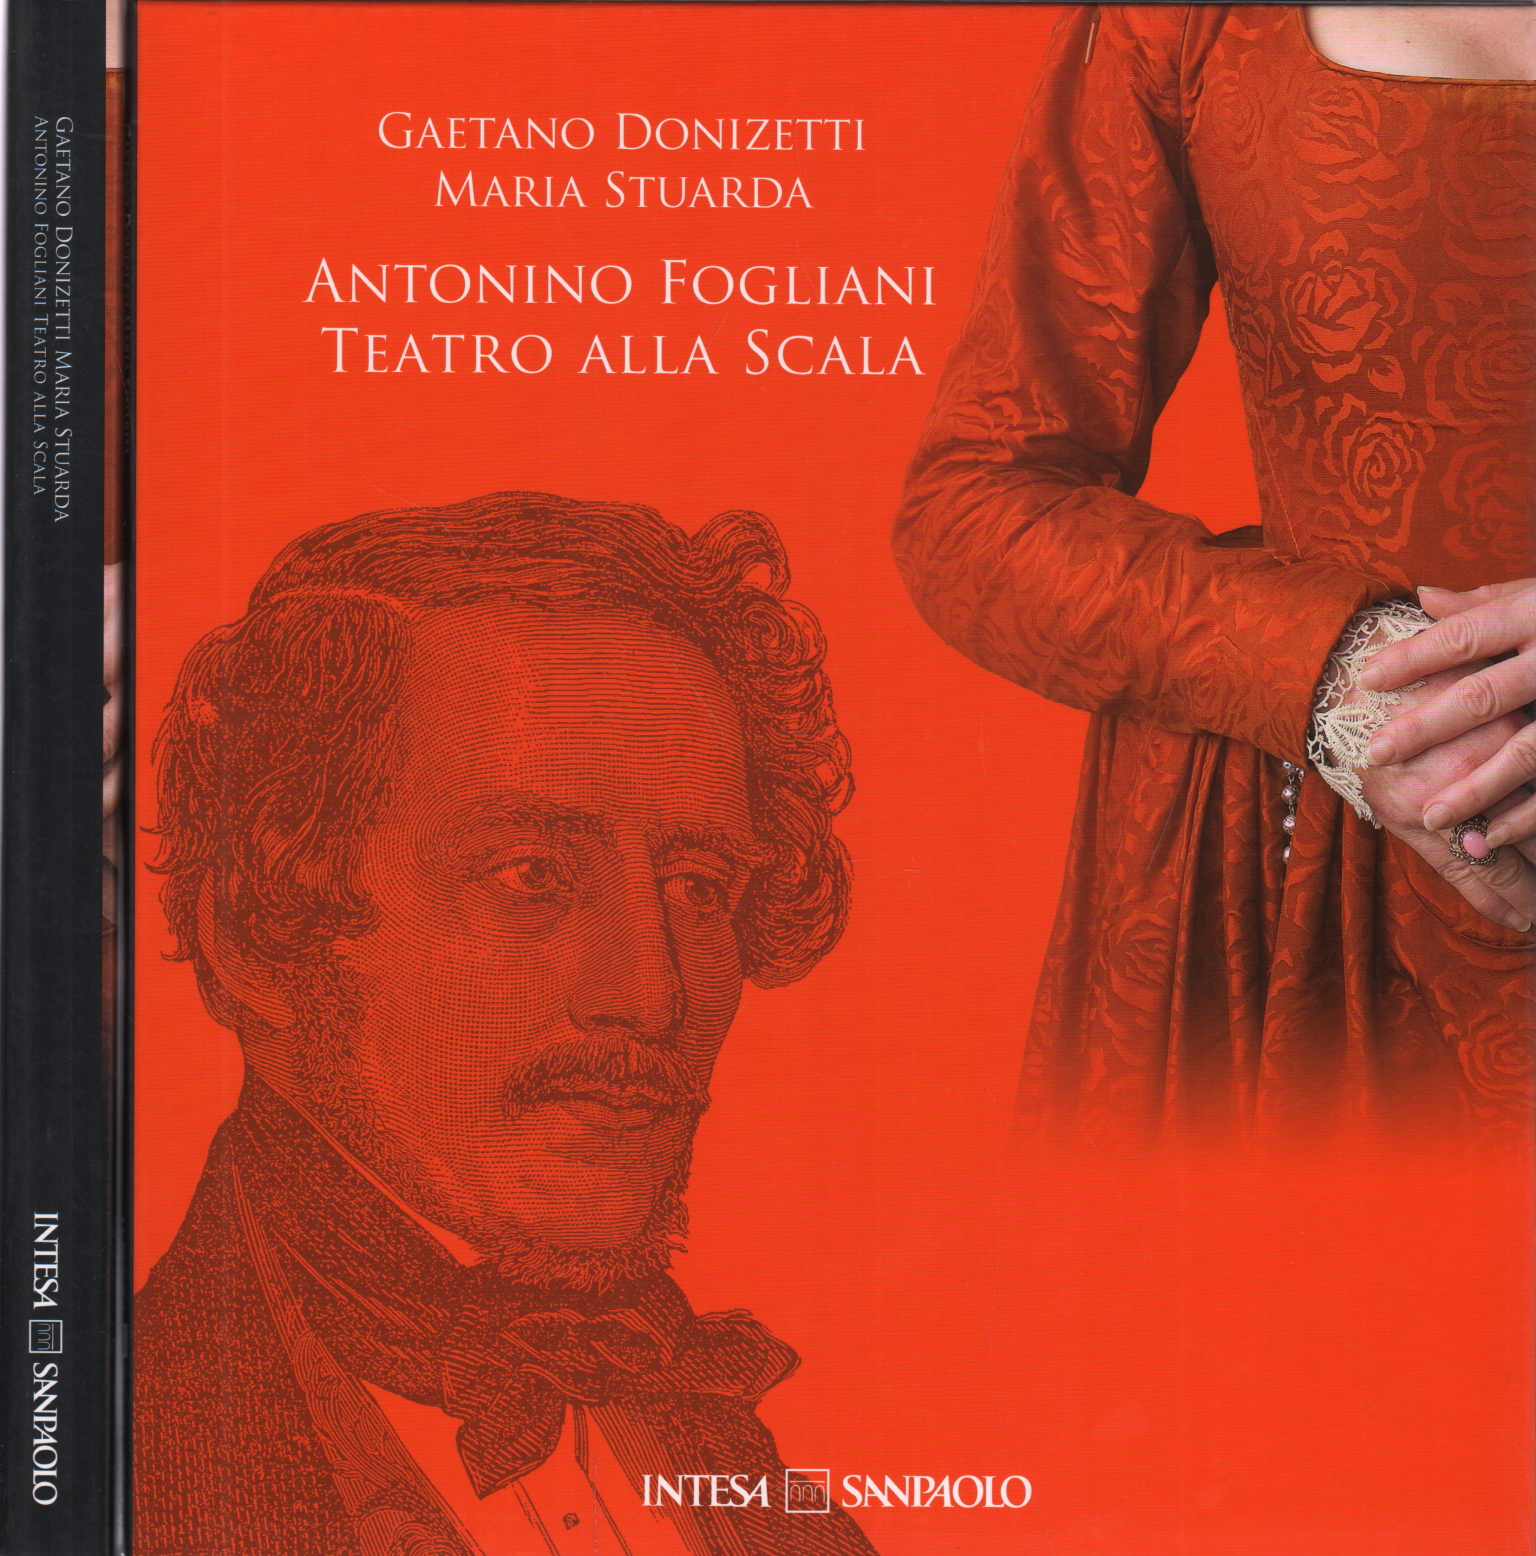 Gaetano Donizetti del "Maria Stuarda" Antonino de la Hoja, de Gaetano Donizetti